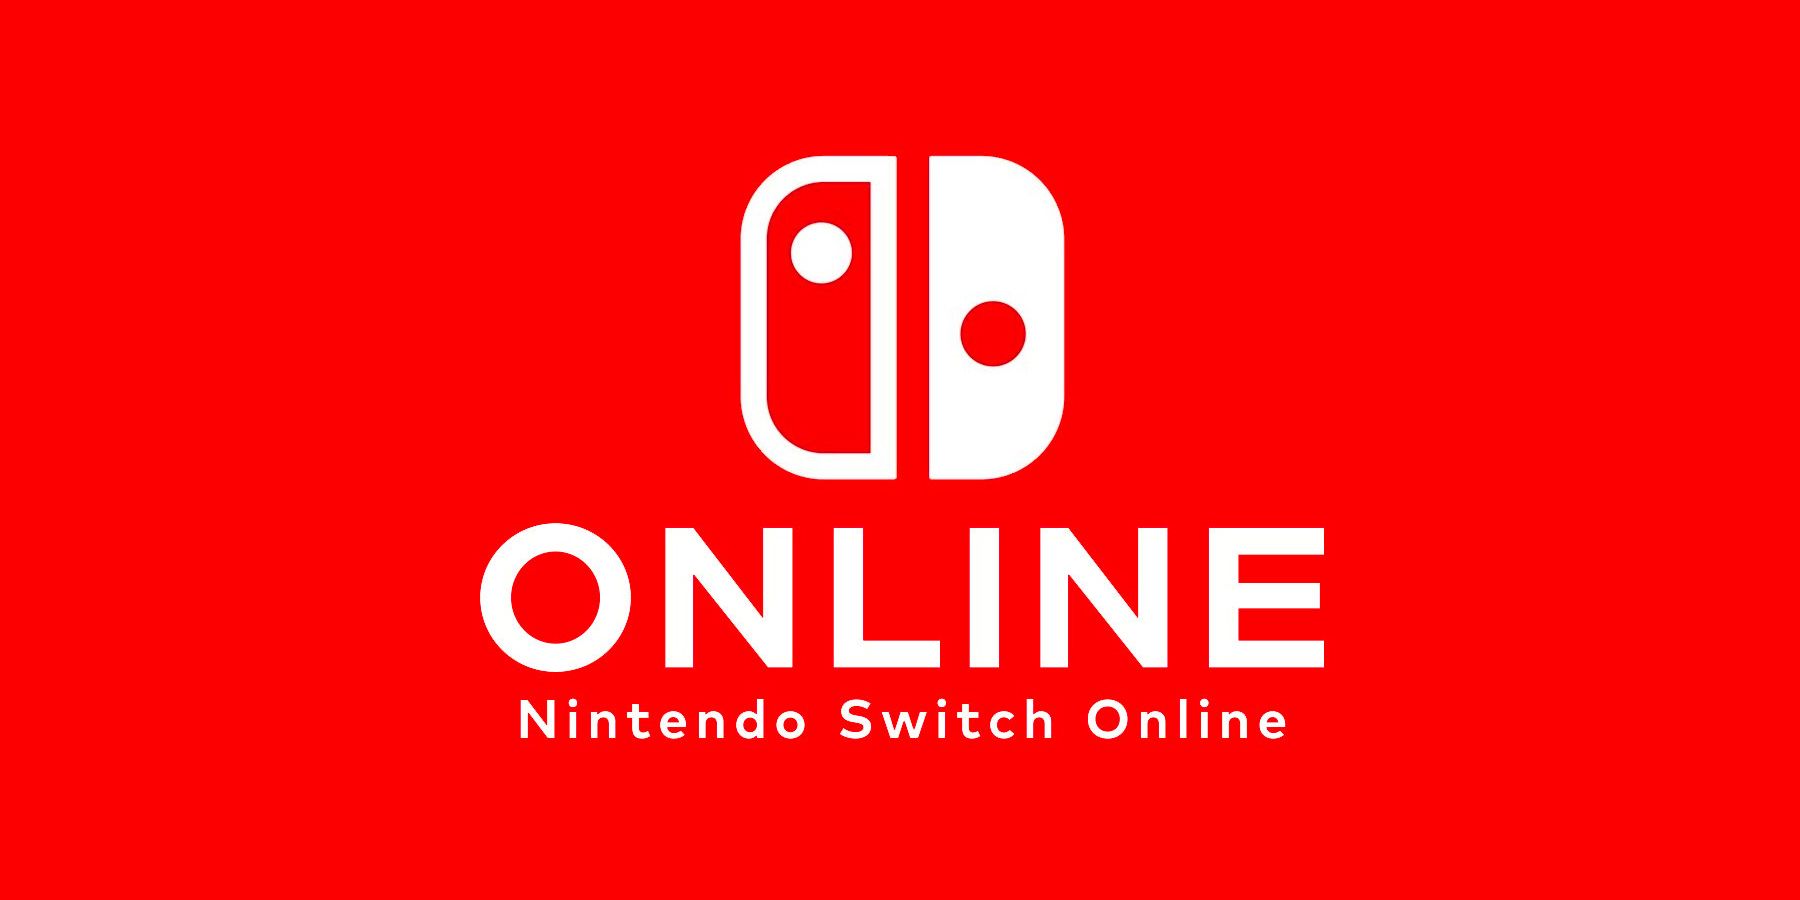 Nintendo Switch Online Game Shutting Down Early Next Week